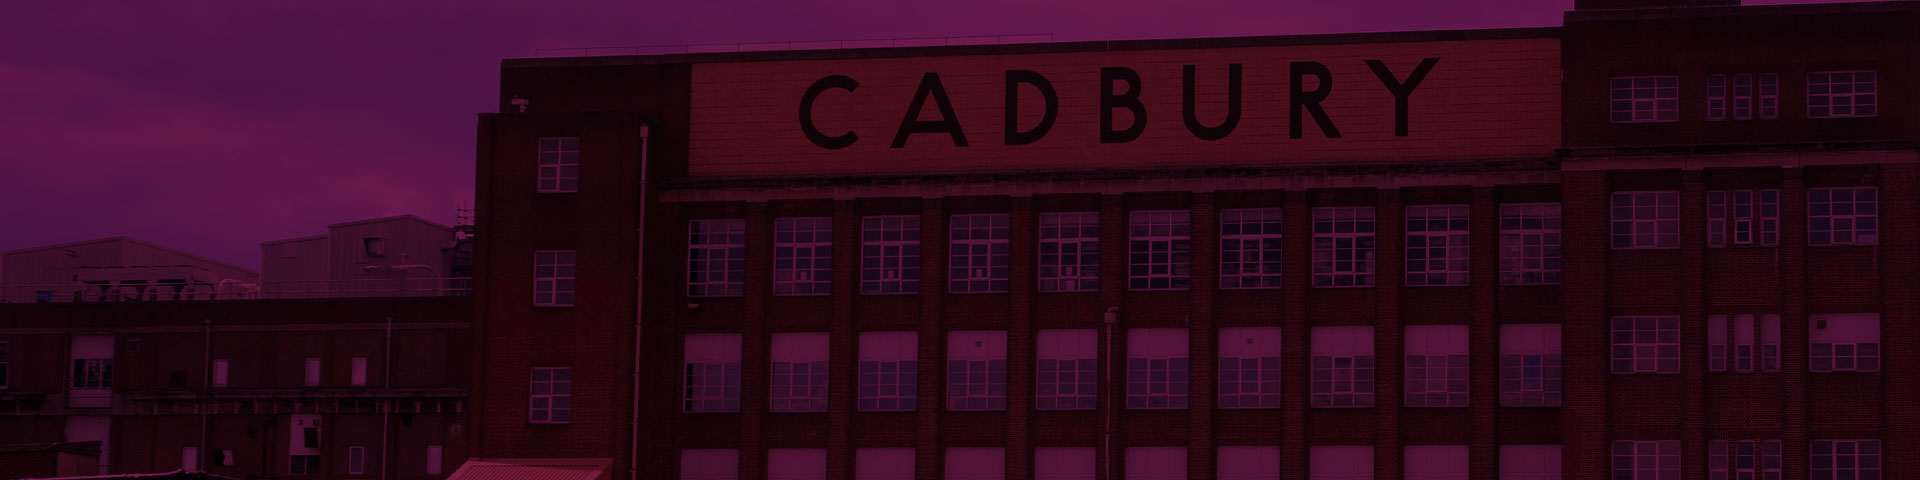 cadbury-title